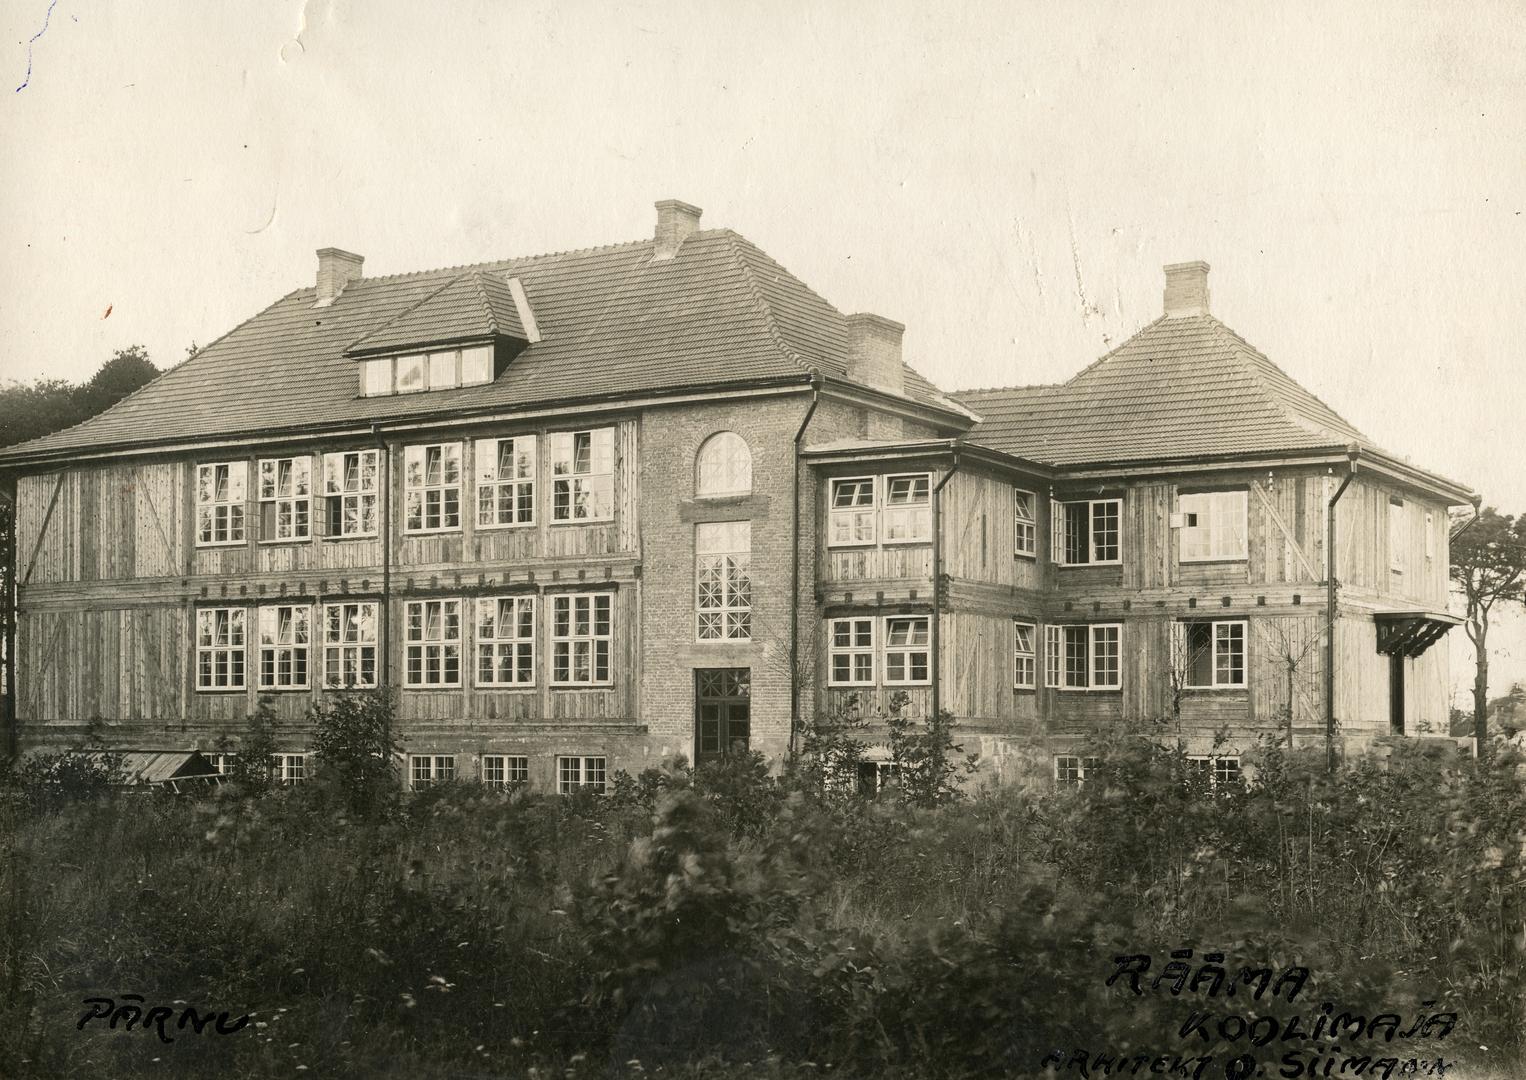 Pärnu City 8. Primary school building. Built in 1929